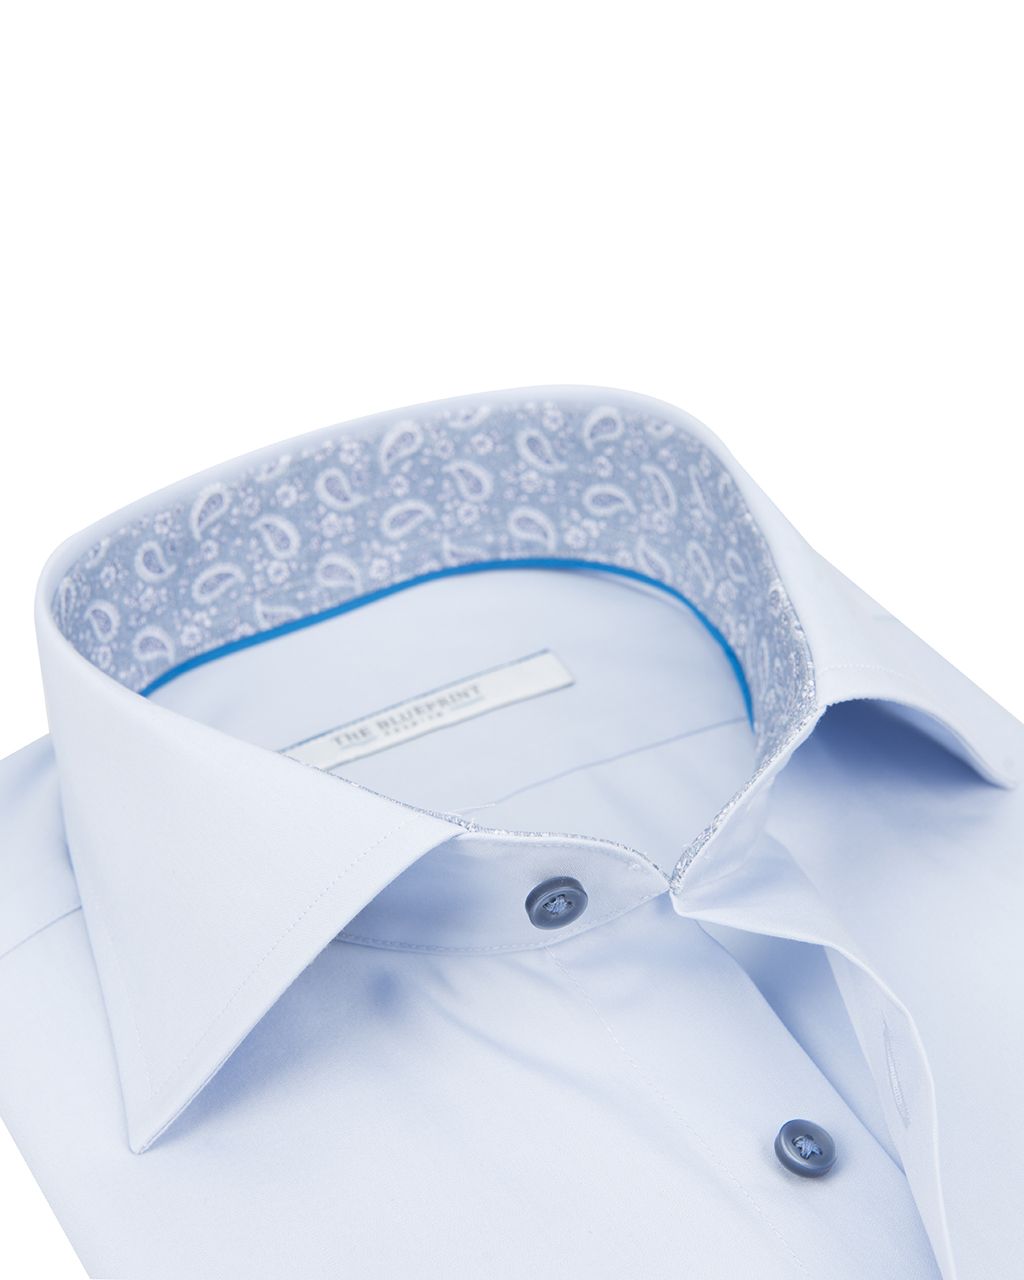 The BLUEPRINT Premium Trendy overhemd LM Middenblauw uni 061870-001-L